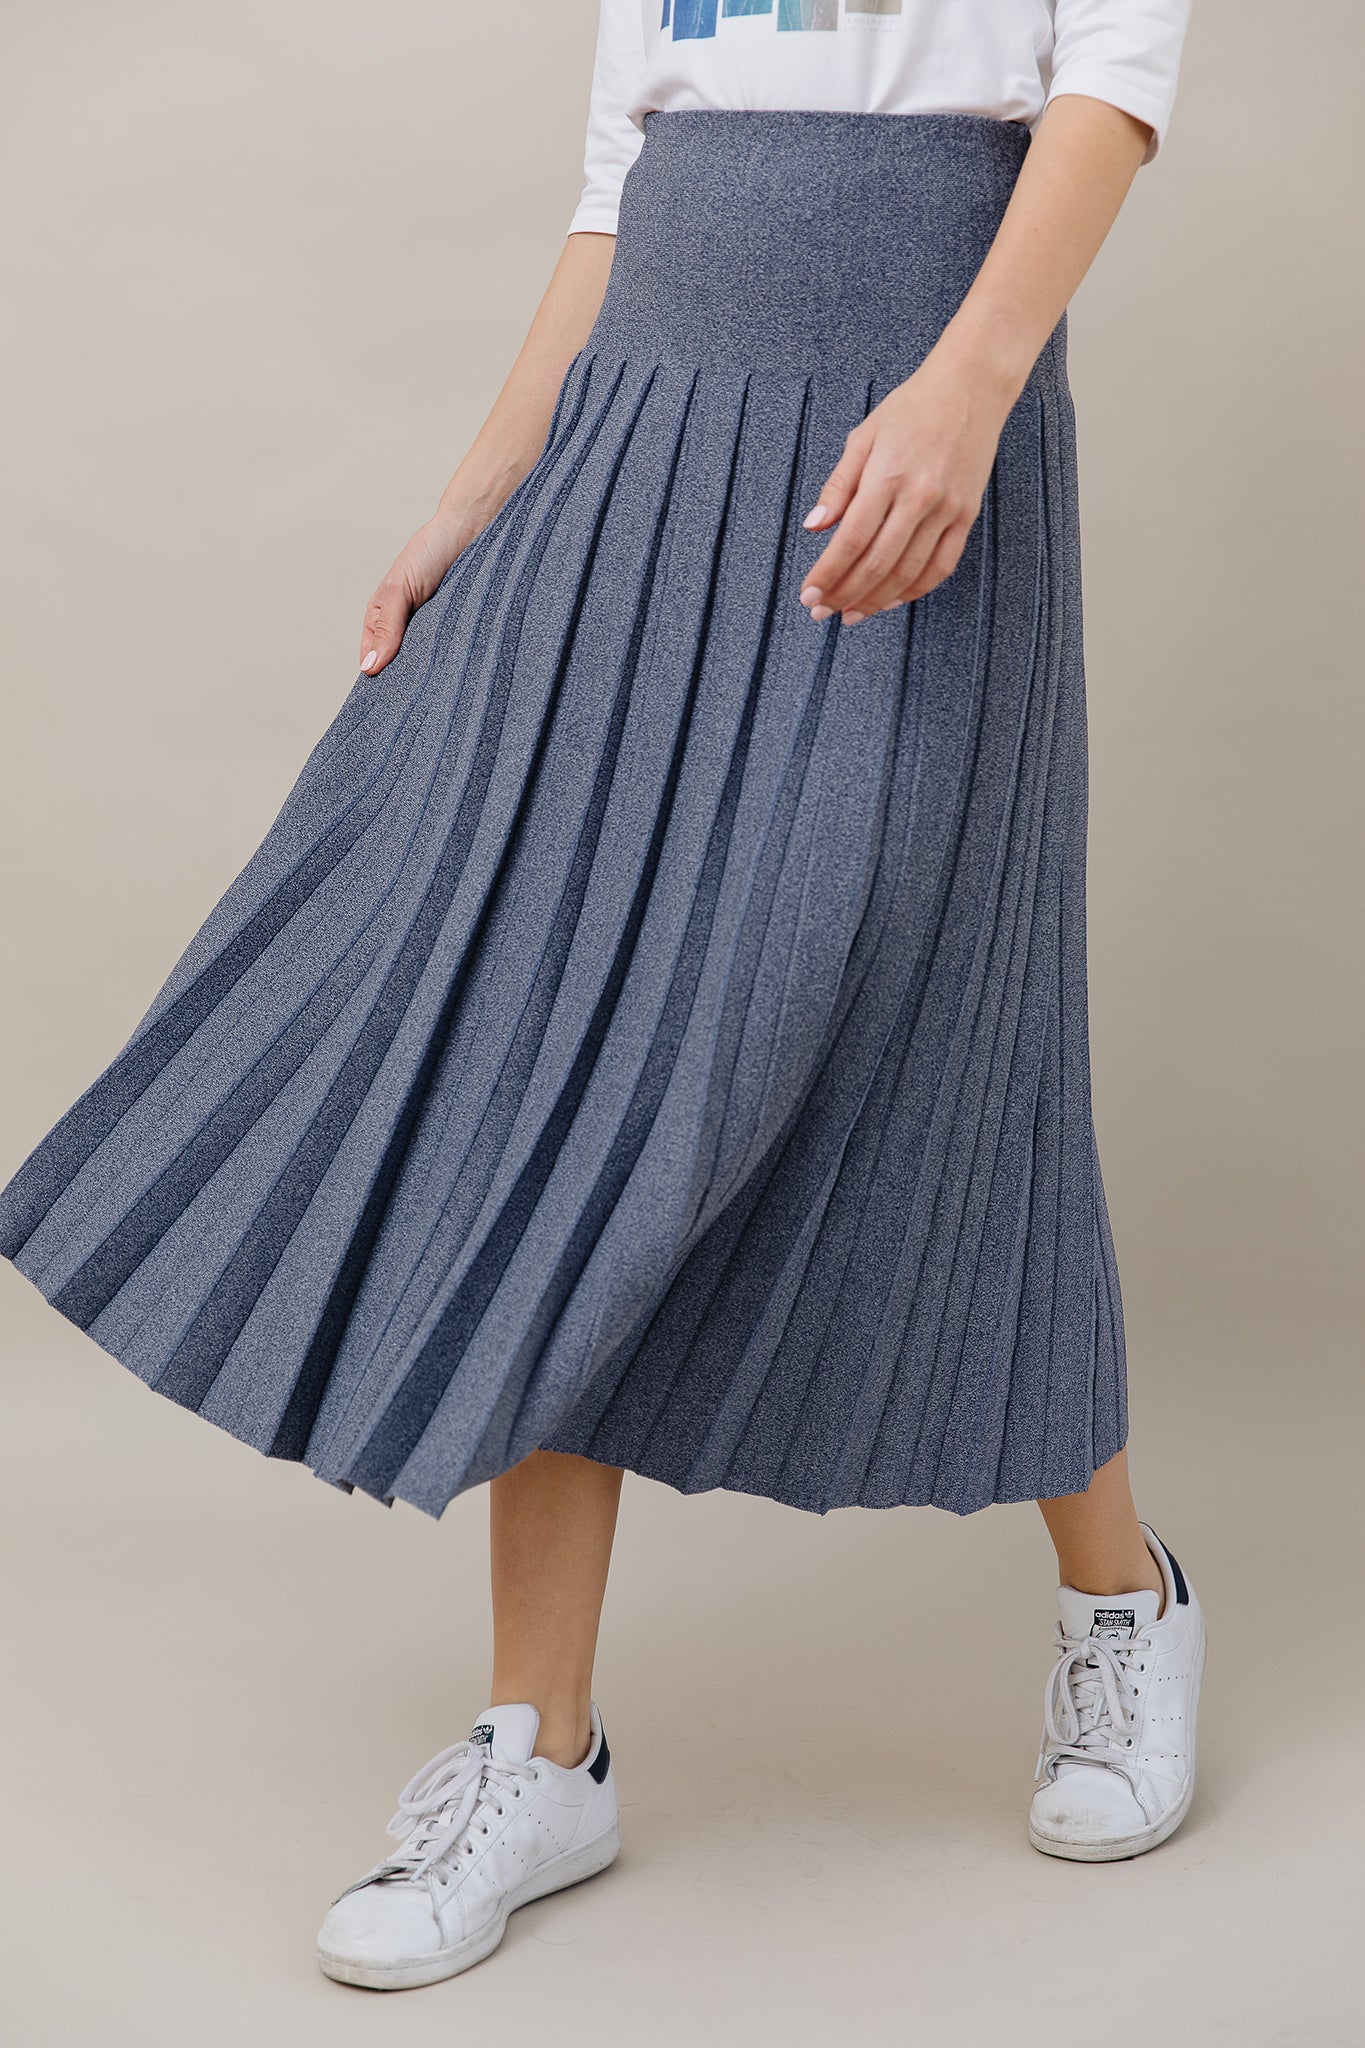 The Maxi Infinity Skirt in Denim